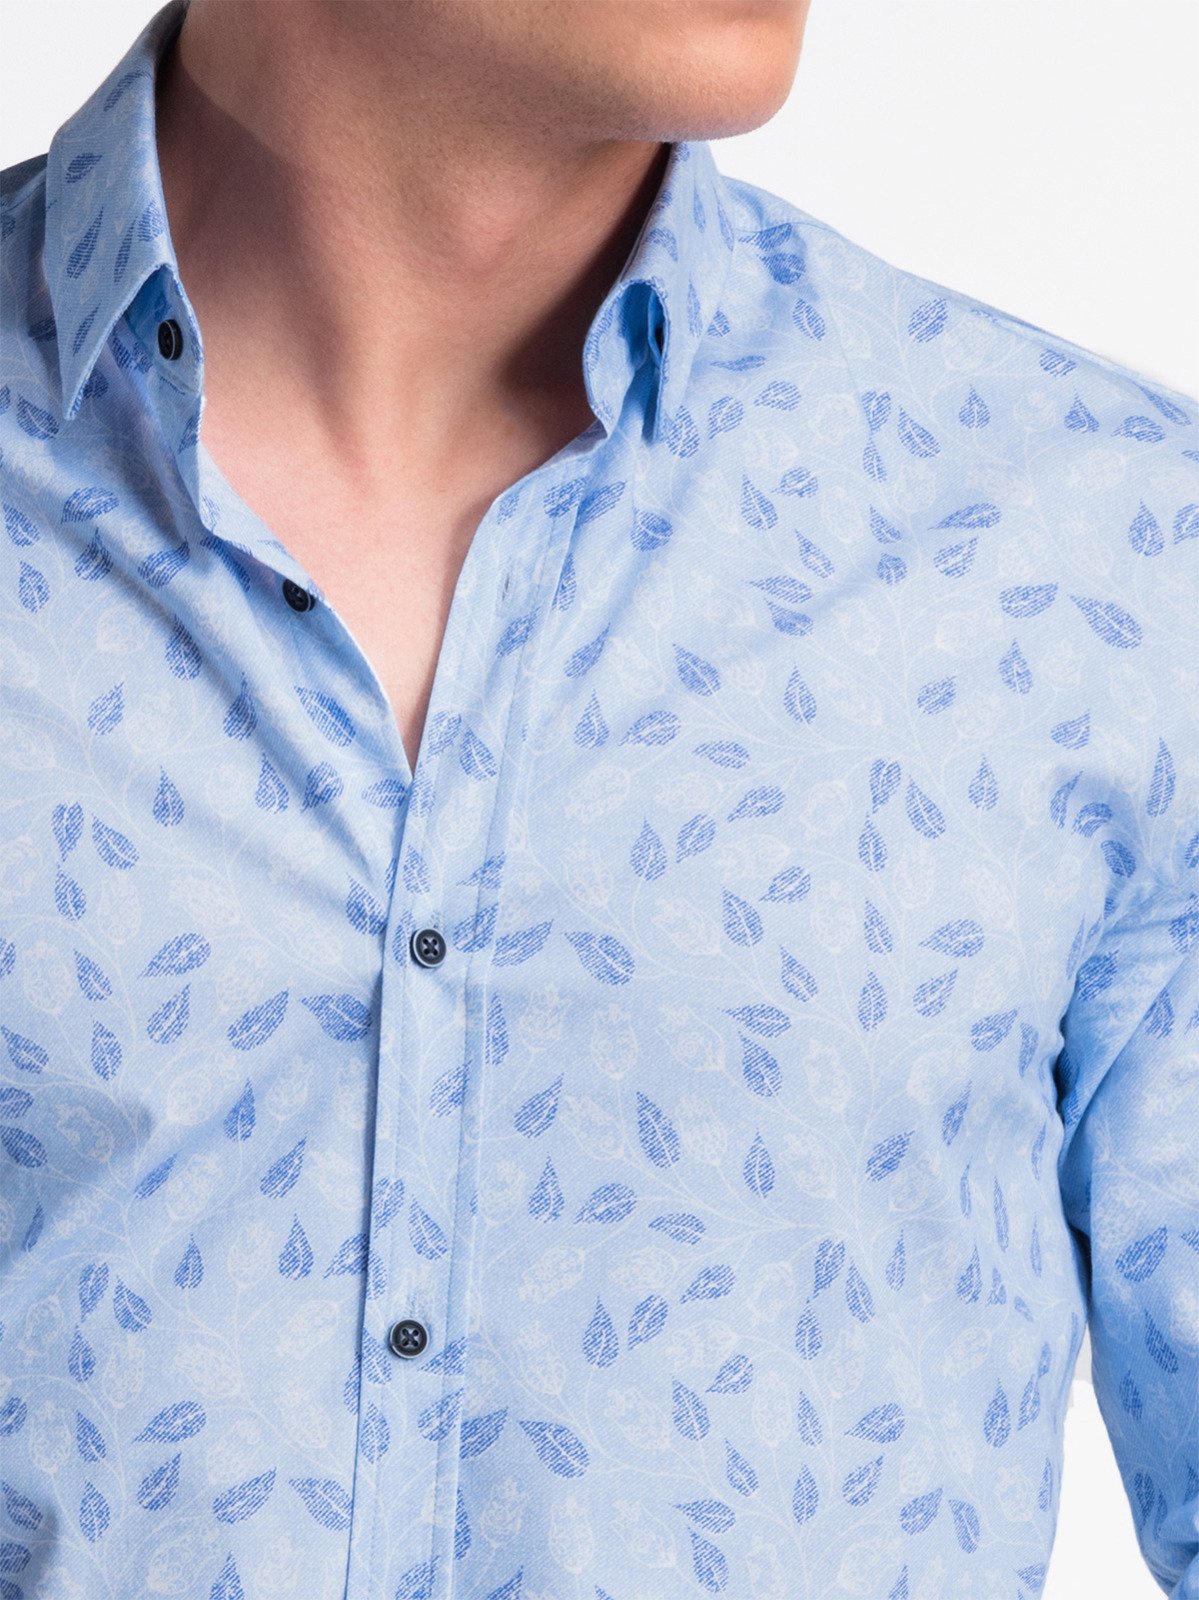 Men's shirt with long sleeves K500 - light blue/blue | MODONE wholesale ...